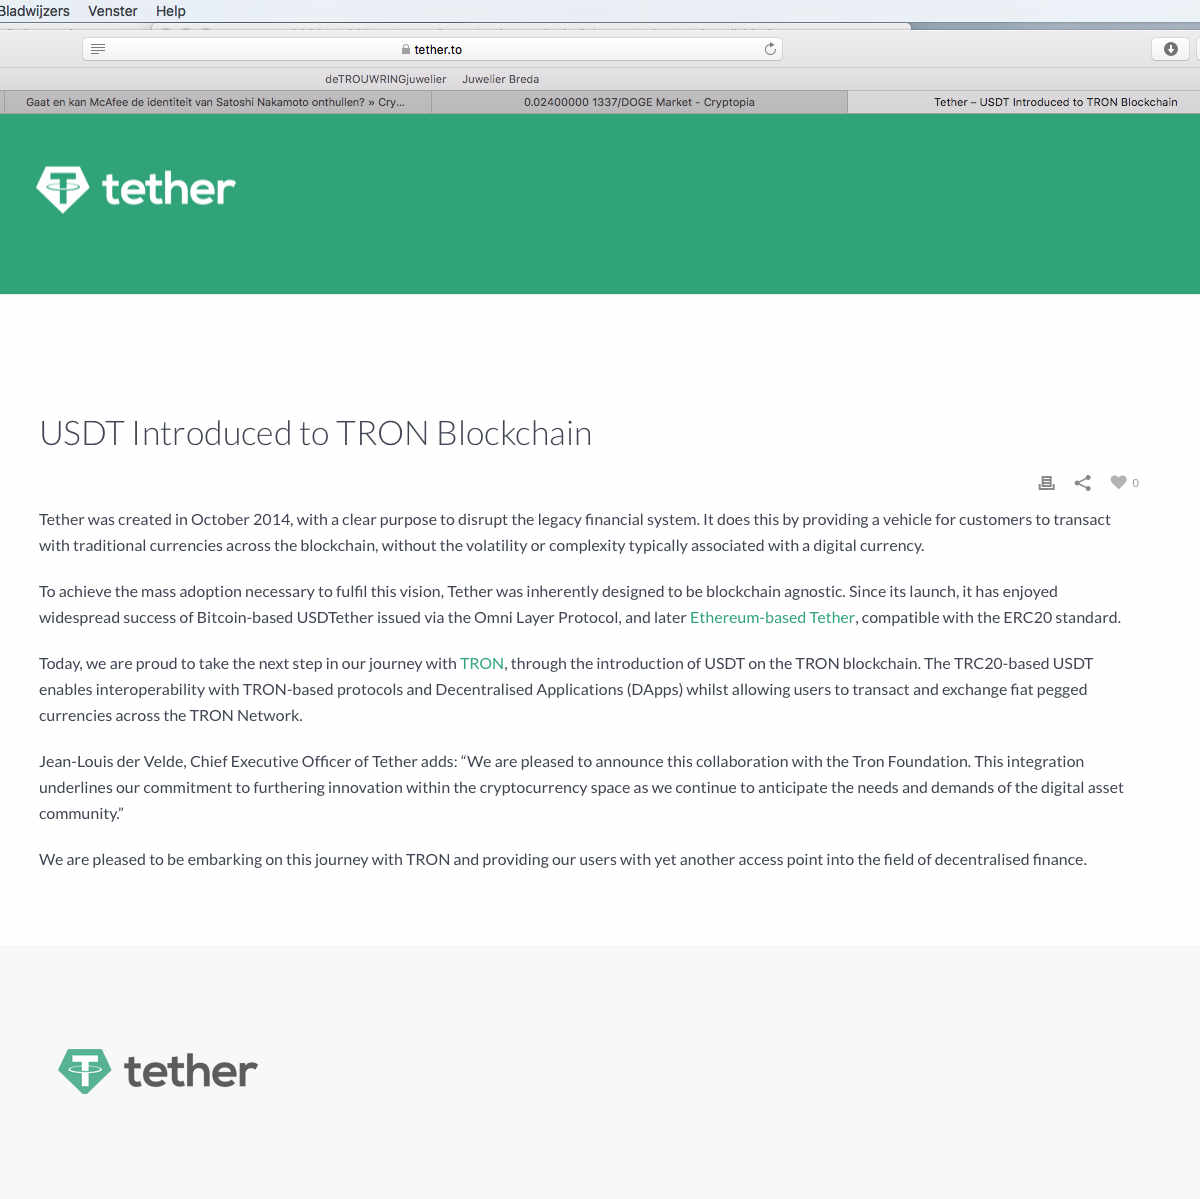 Tether's USDT gelanceerd op TRON blockchain